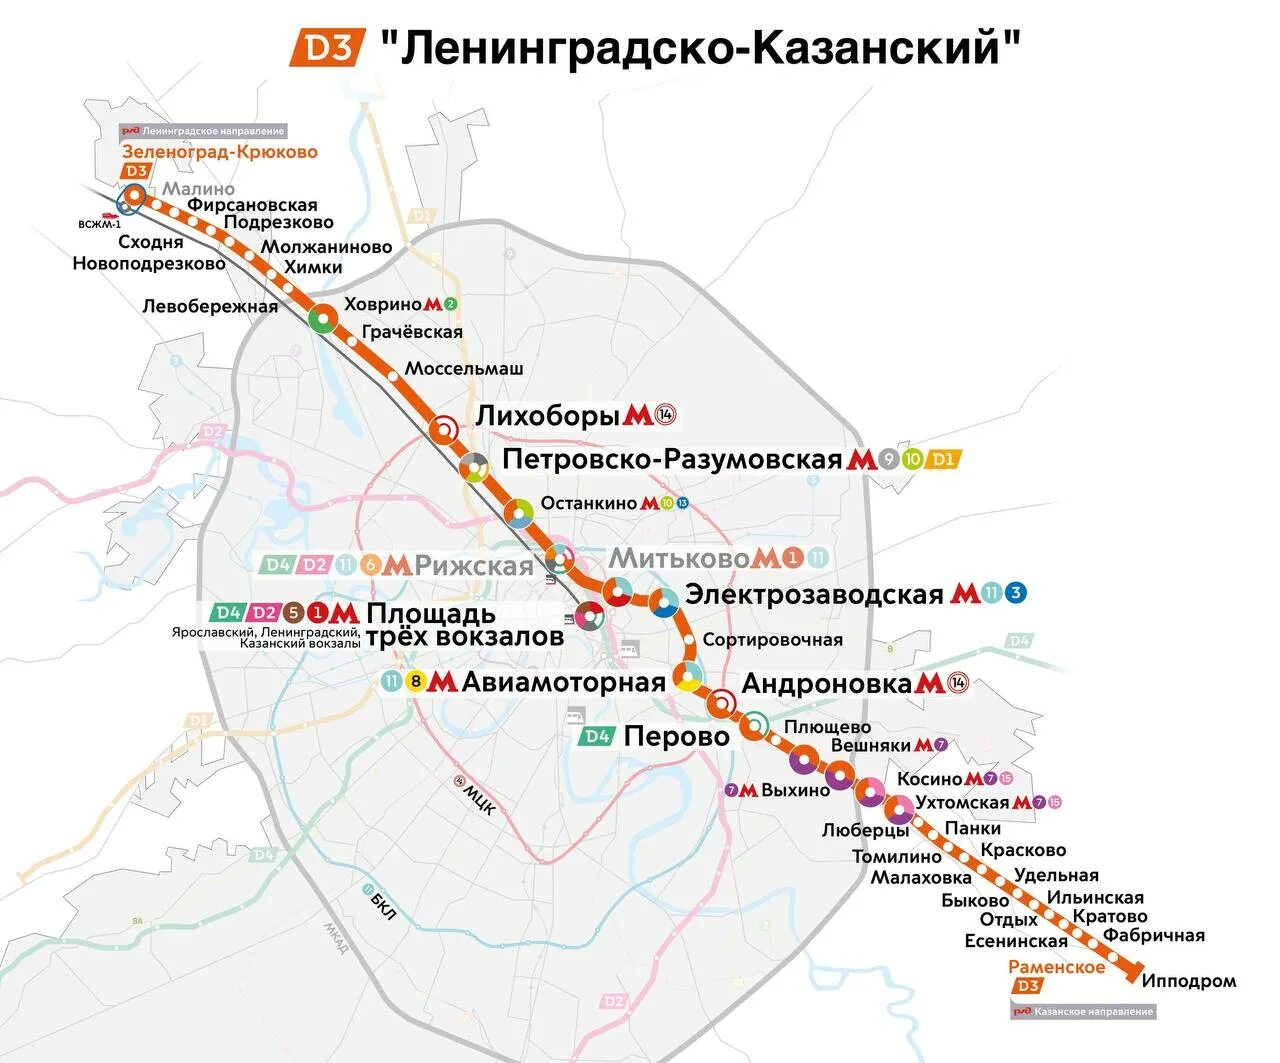 Электричка фабрика 1 мая ростокино. Схема метро 3 диаметр. Карта МЦД. Наземное метро в Москве схема.